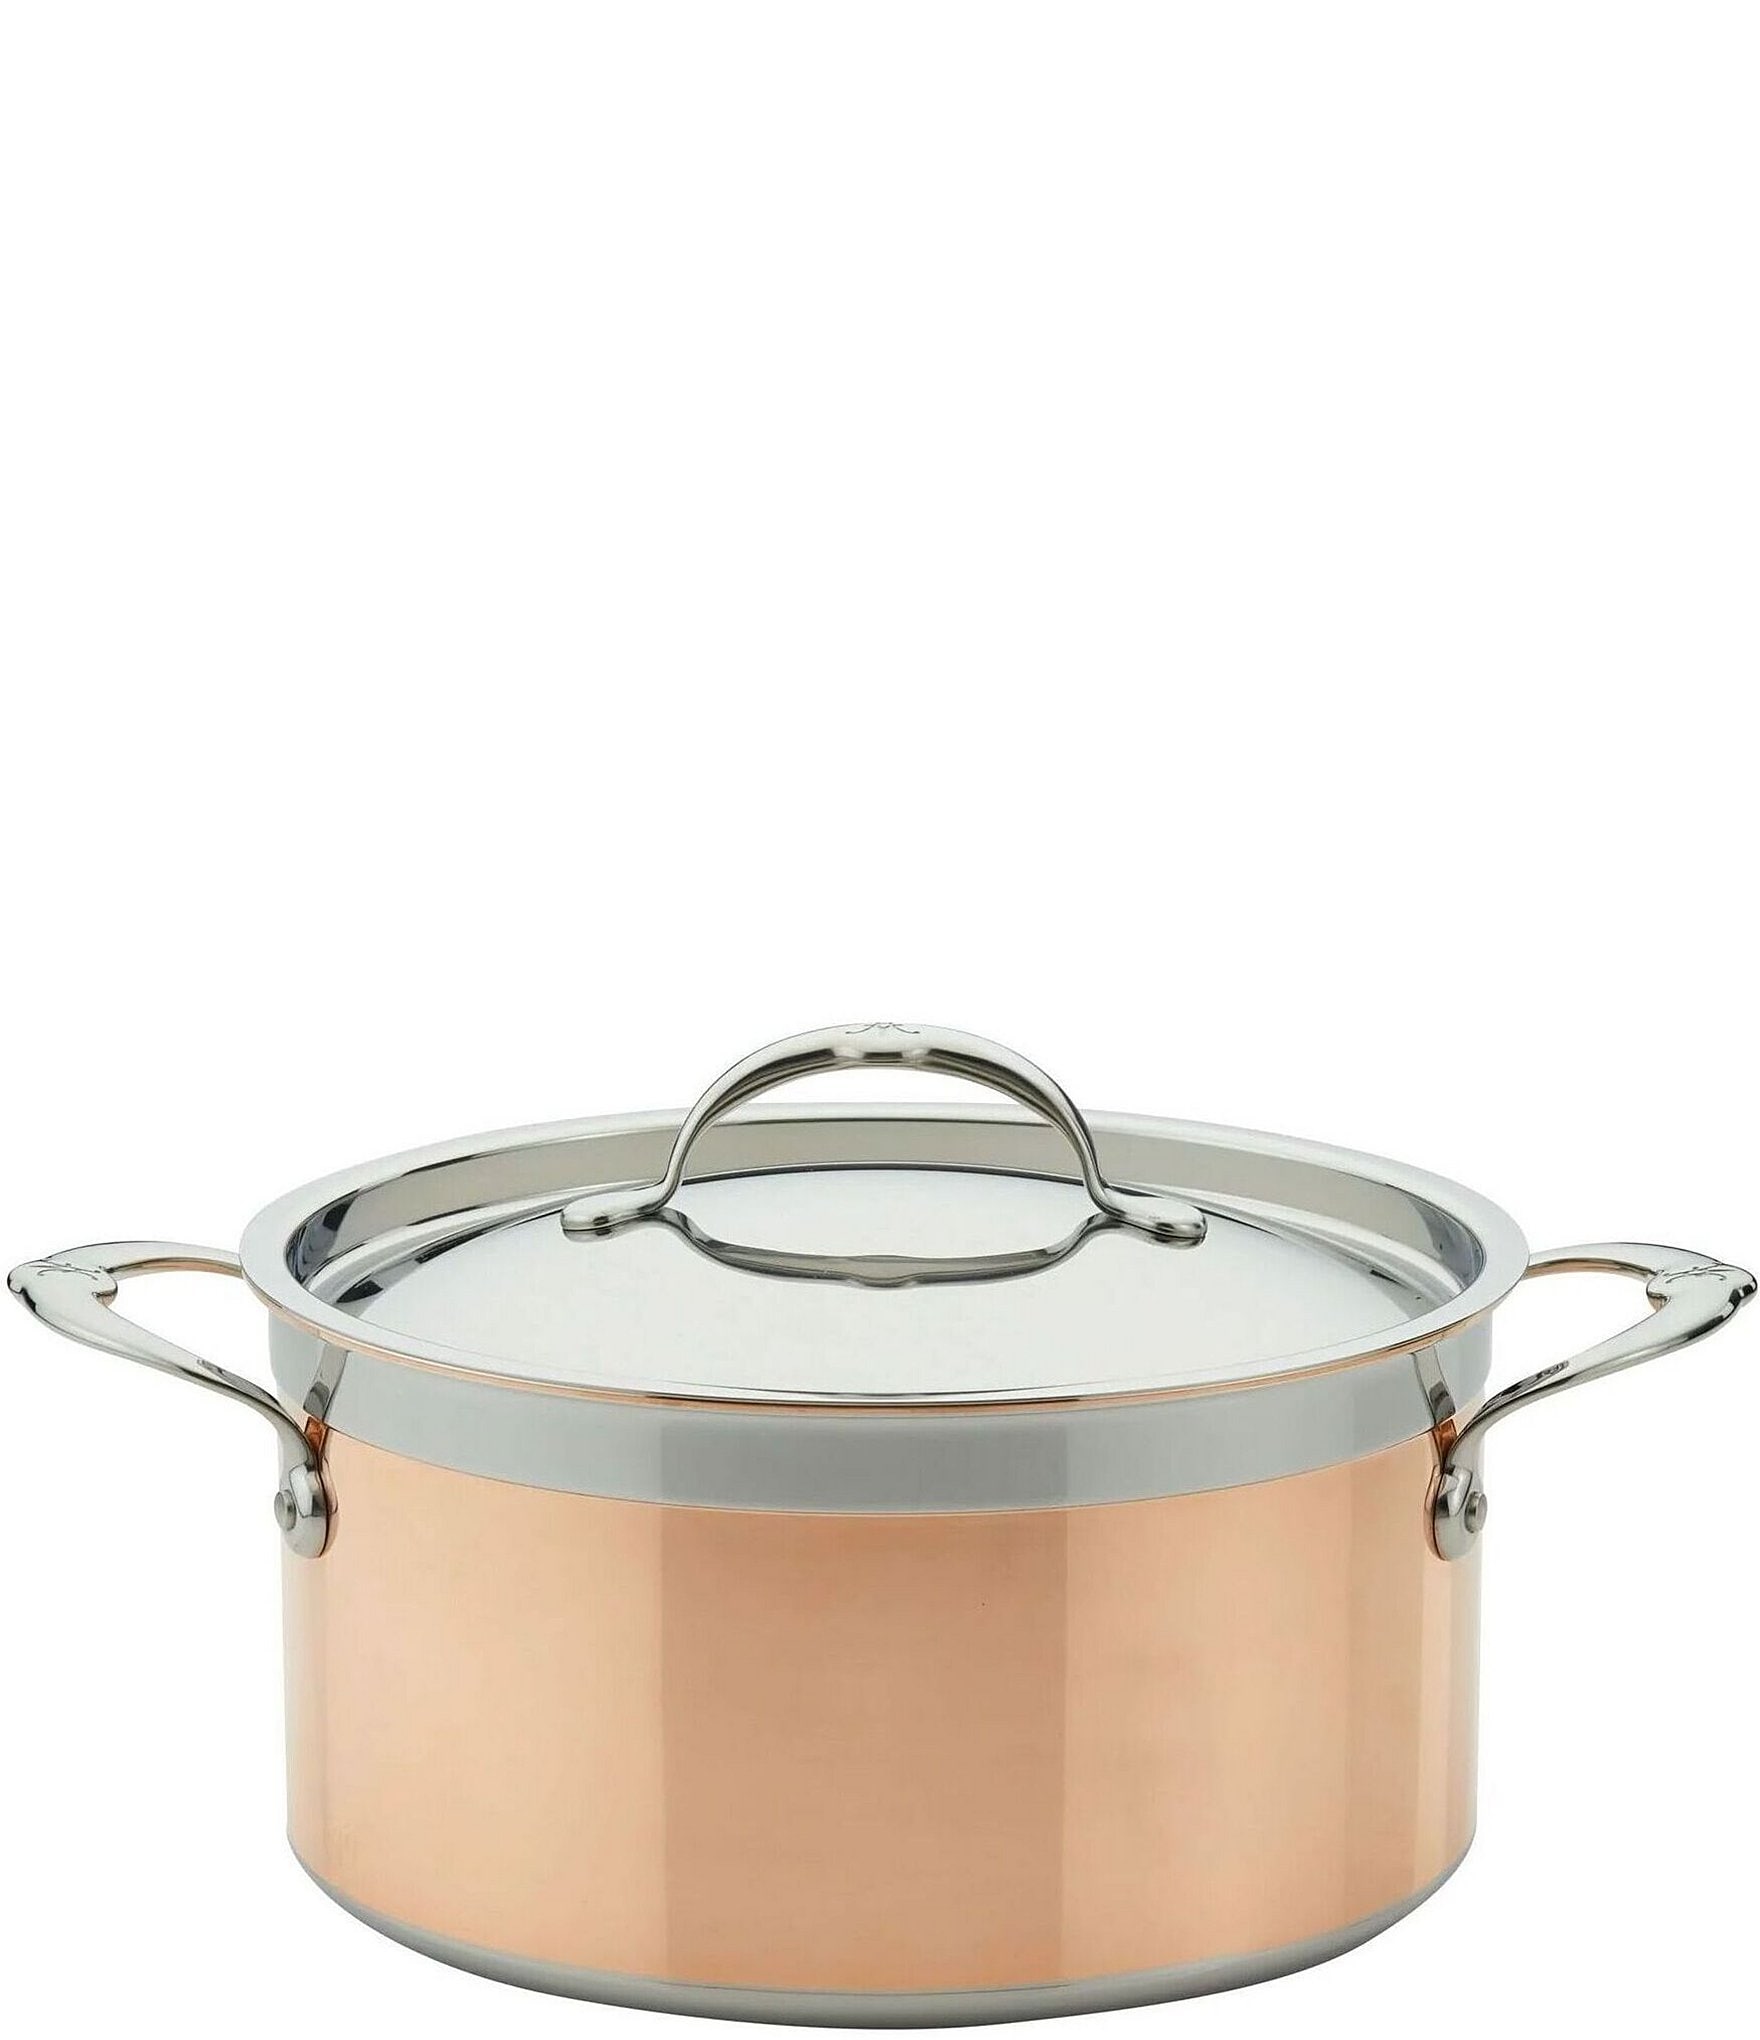 Hestan CopperBond 10-Piece Cookware Set - Copper